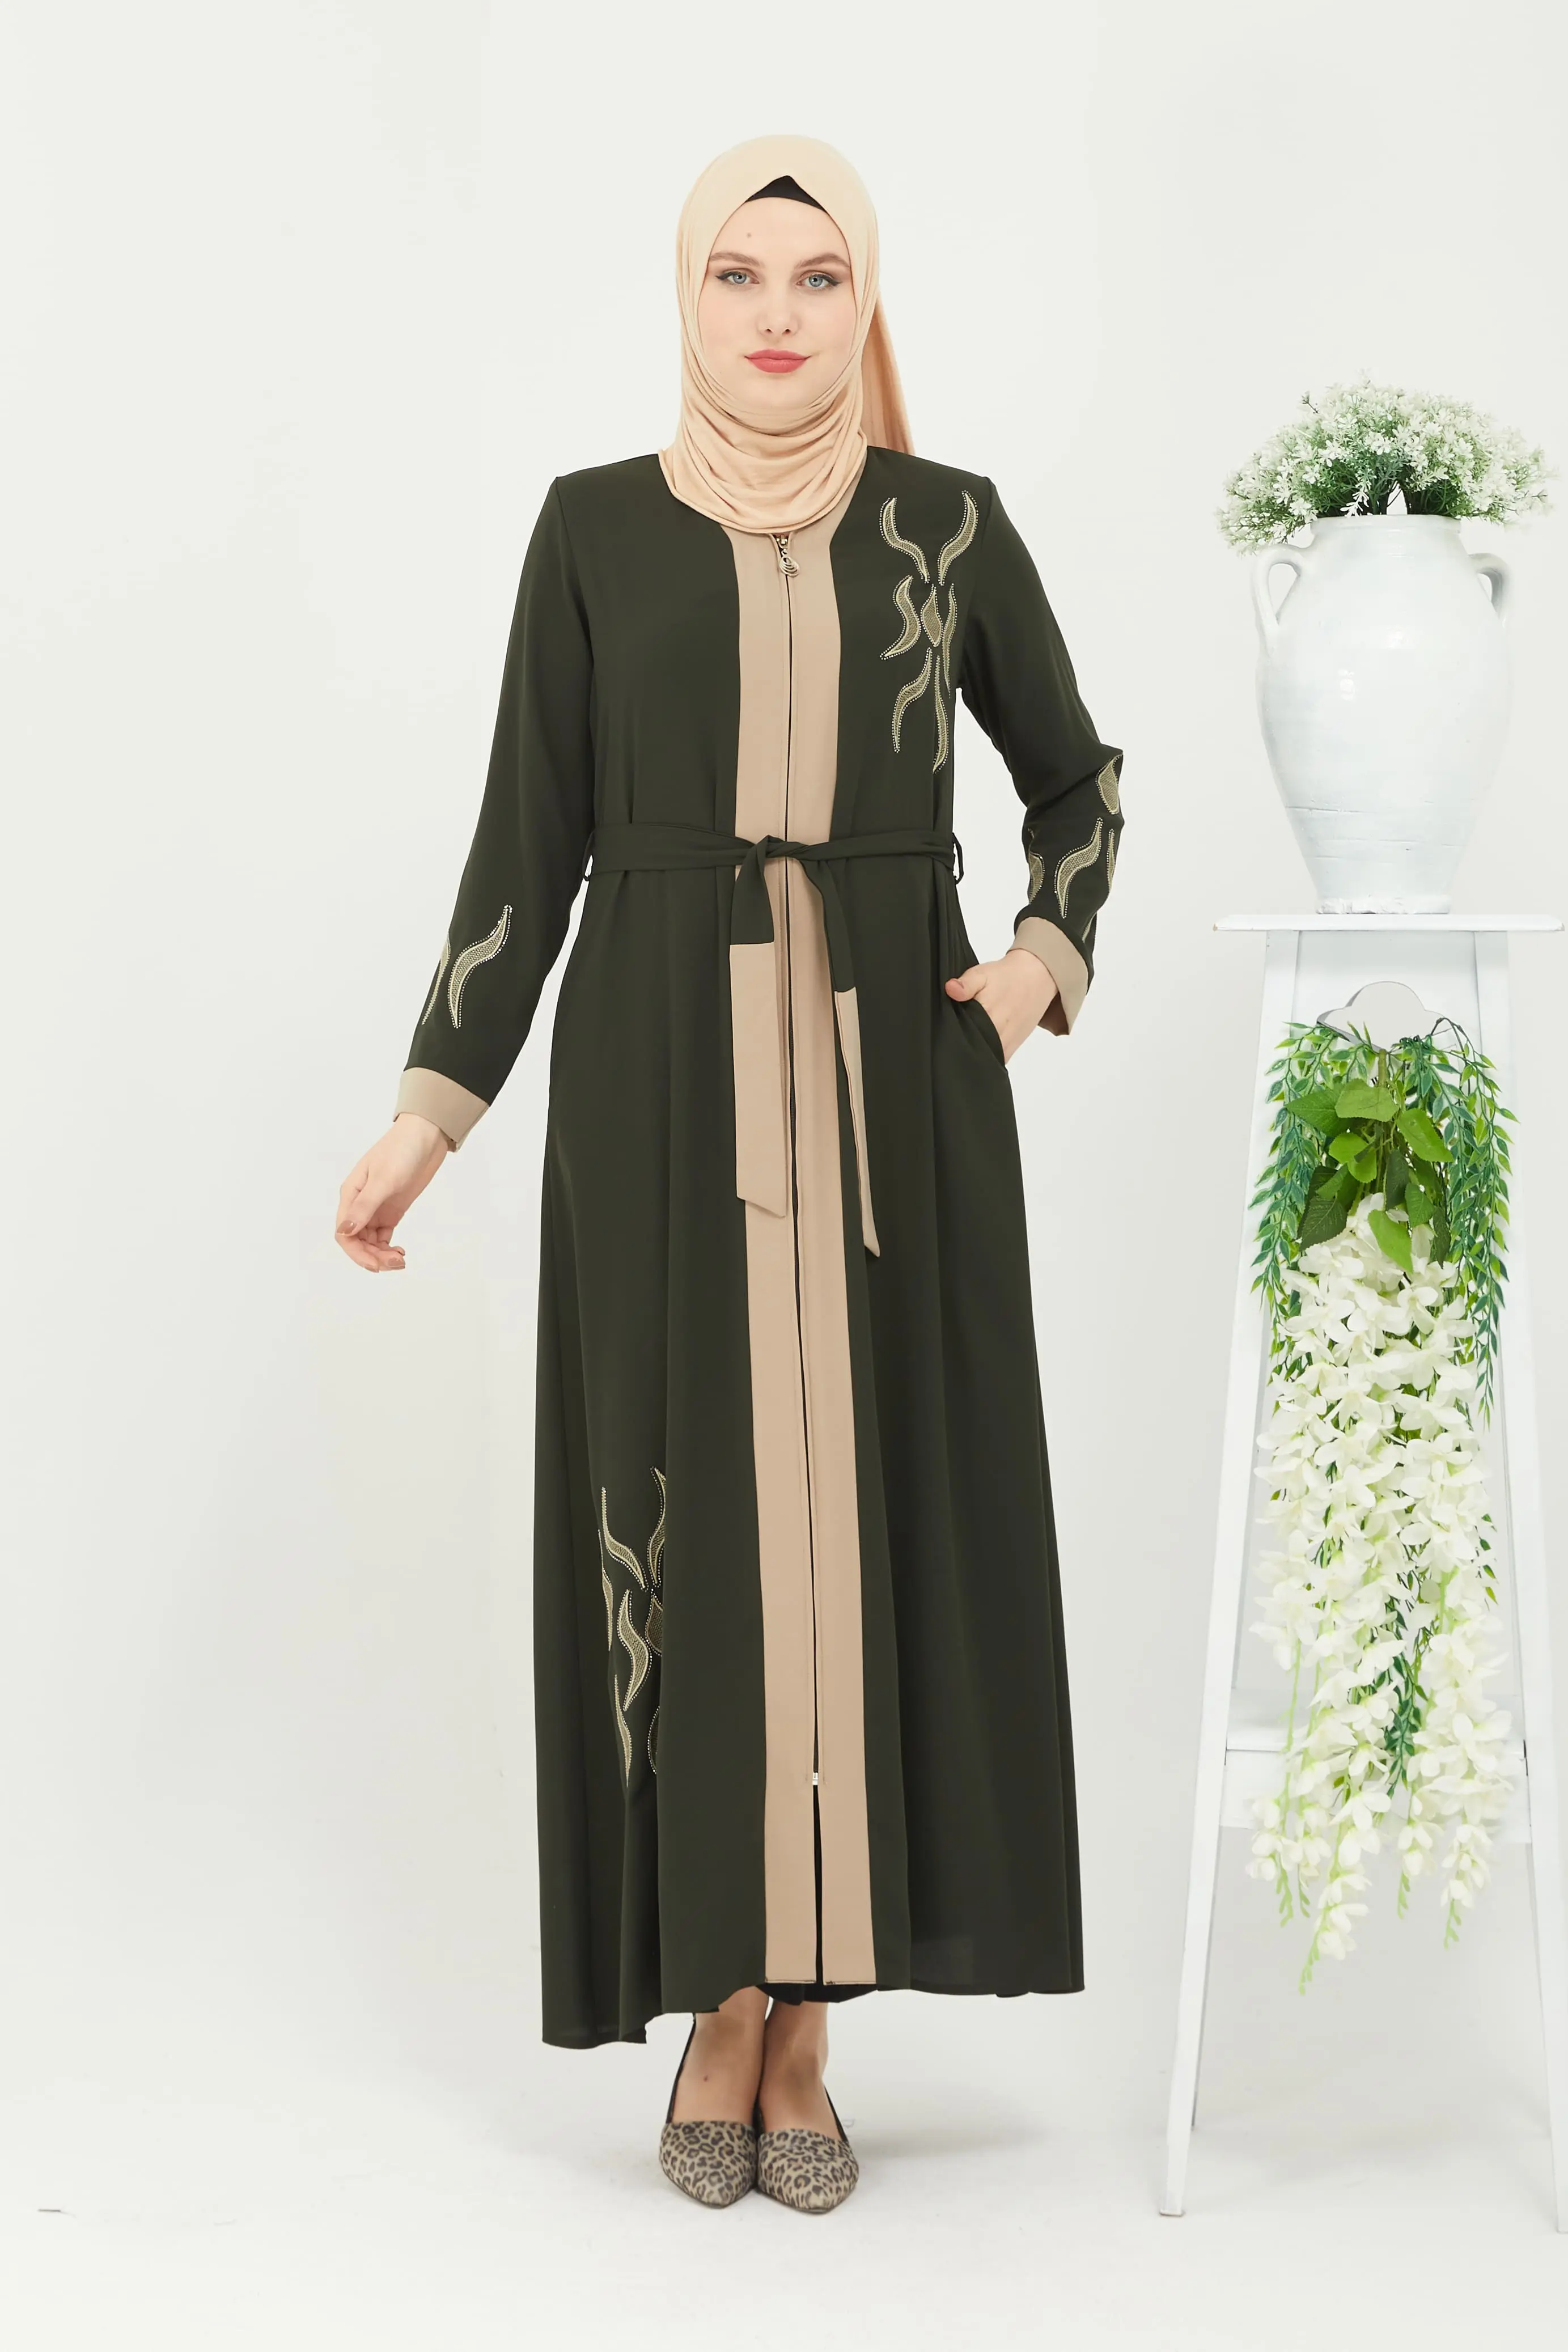 New Season Special Design Abaya